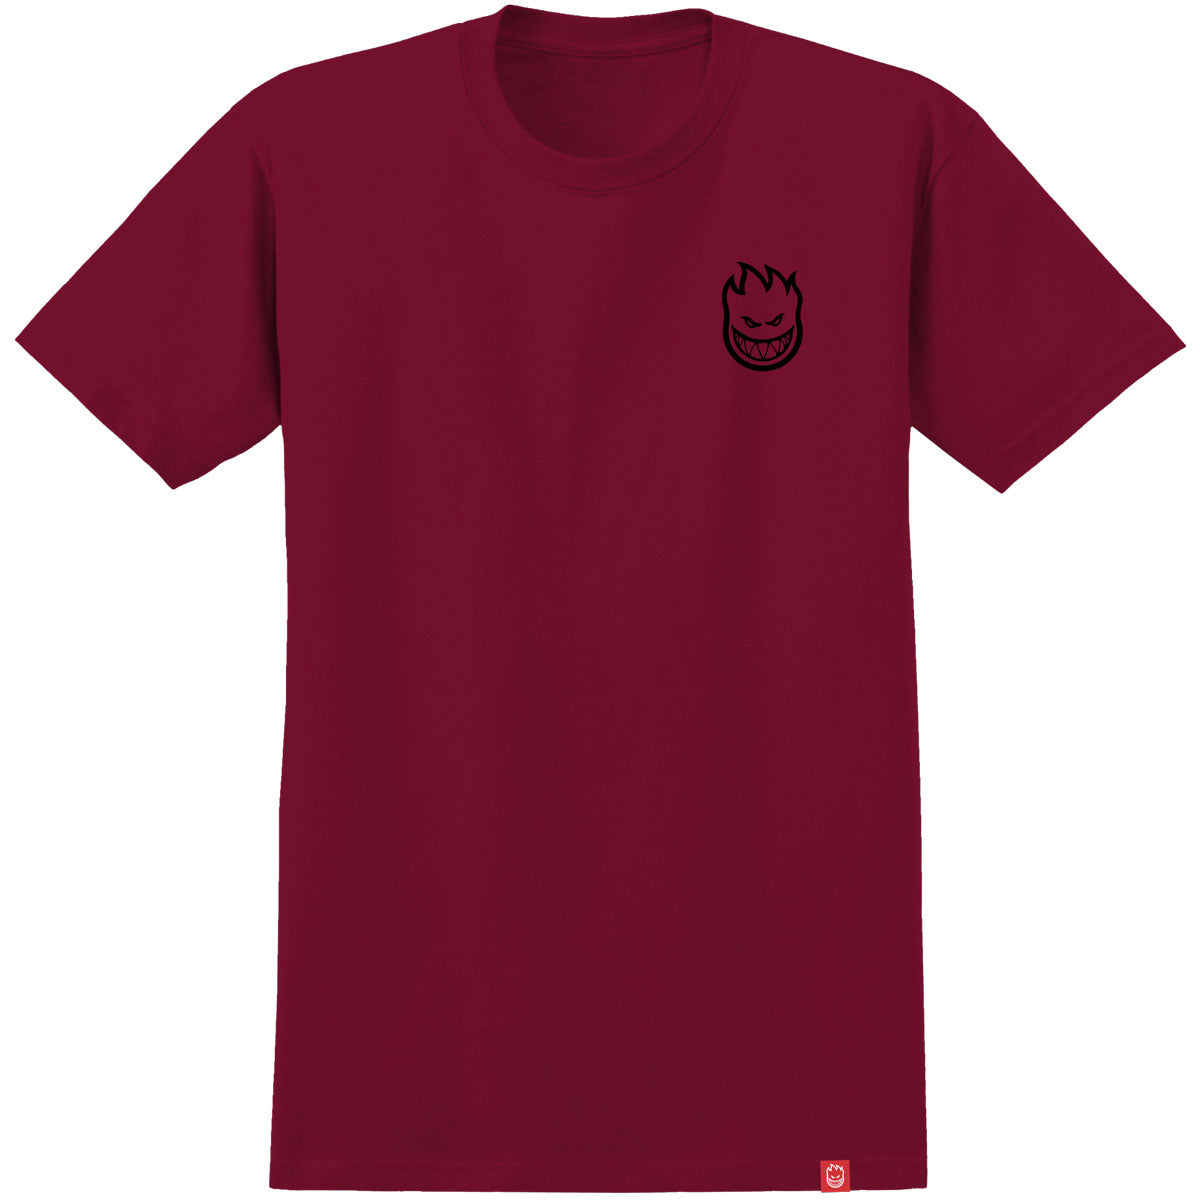 Spitfire Lil Bighead T-Shirt - Cardinal/Black image 1